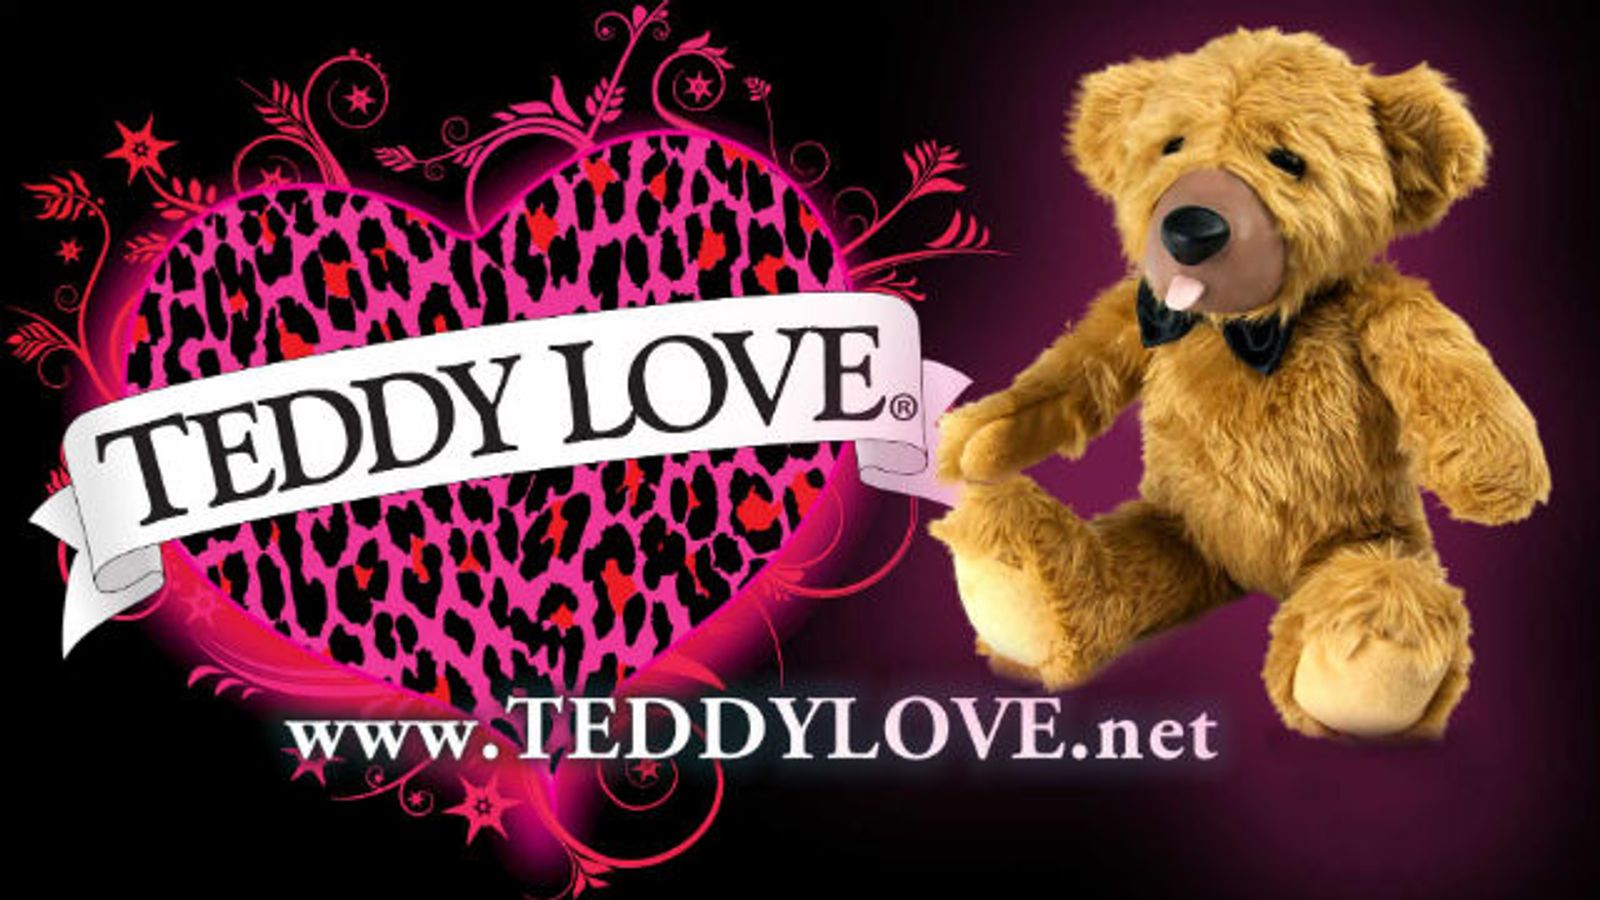 AndrewBlake.com is Now Carrying Teddy Love Bear